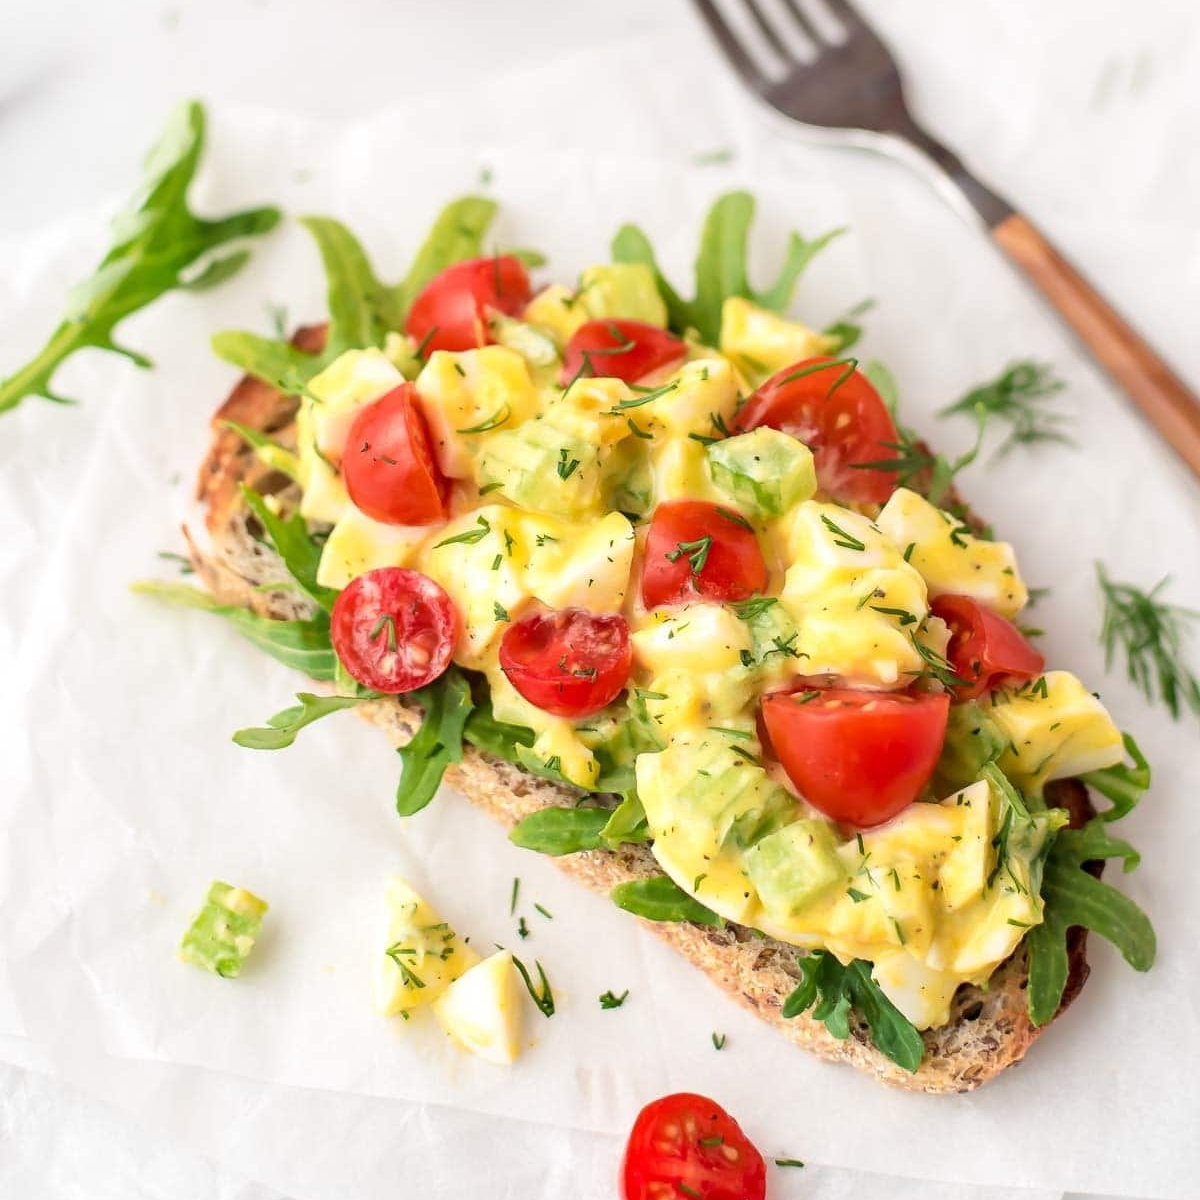 Healthy-Egg-Salad-recipe-with-no-mayo.jpg